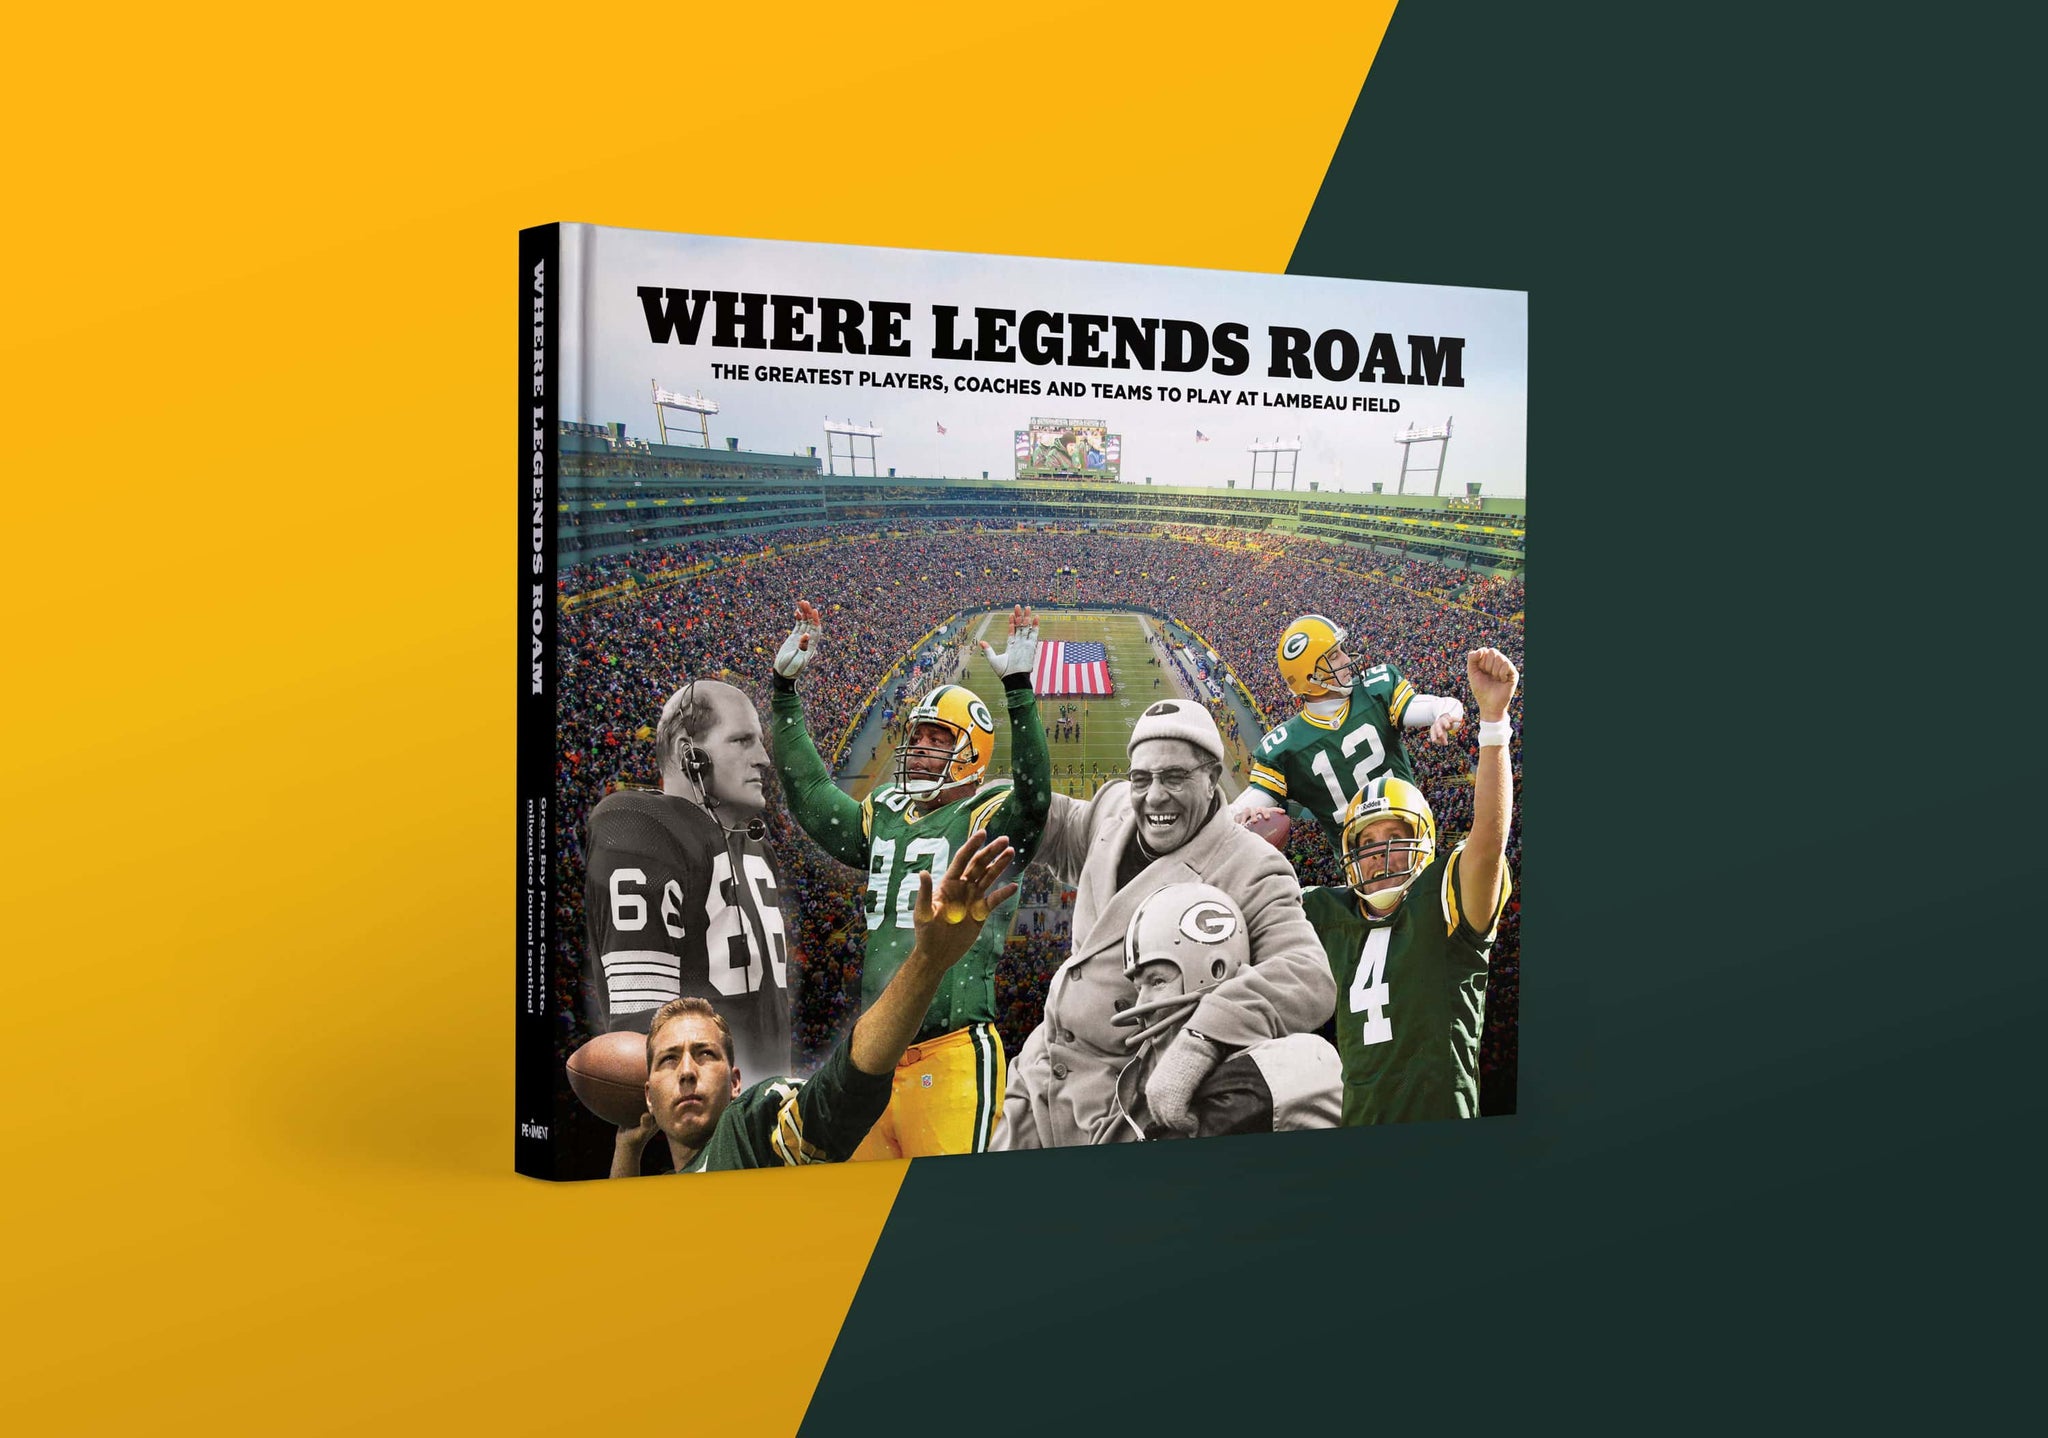 Lifelong friend has treasure trove of memories of Packers legend